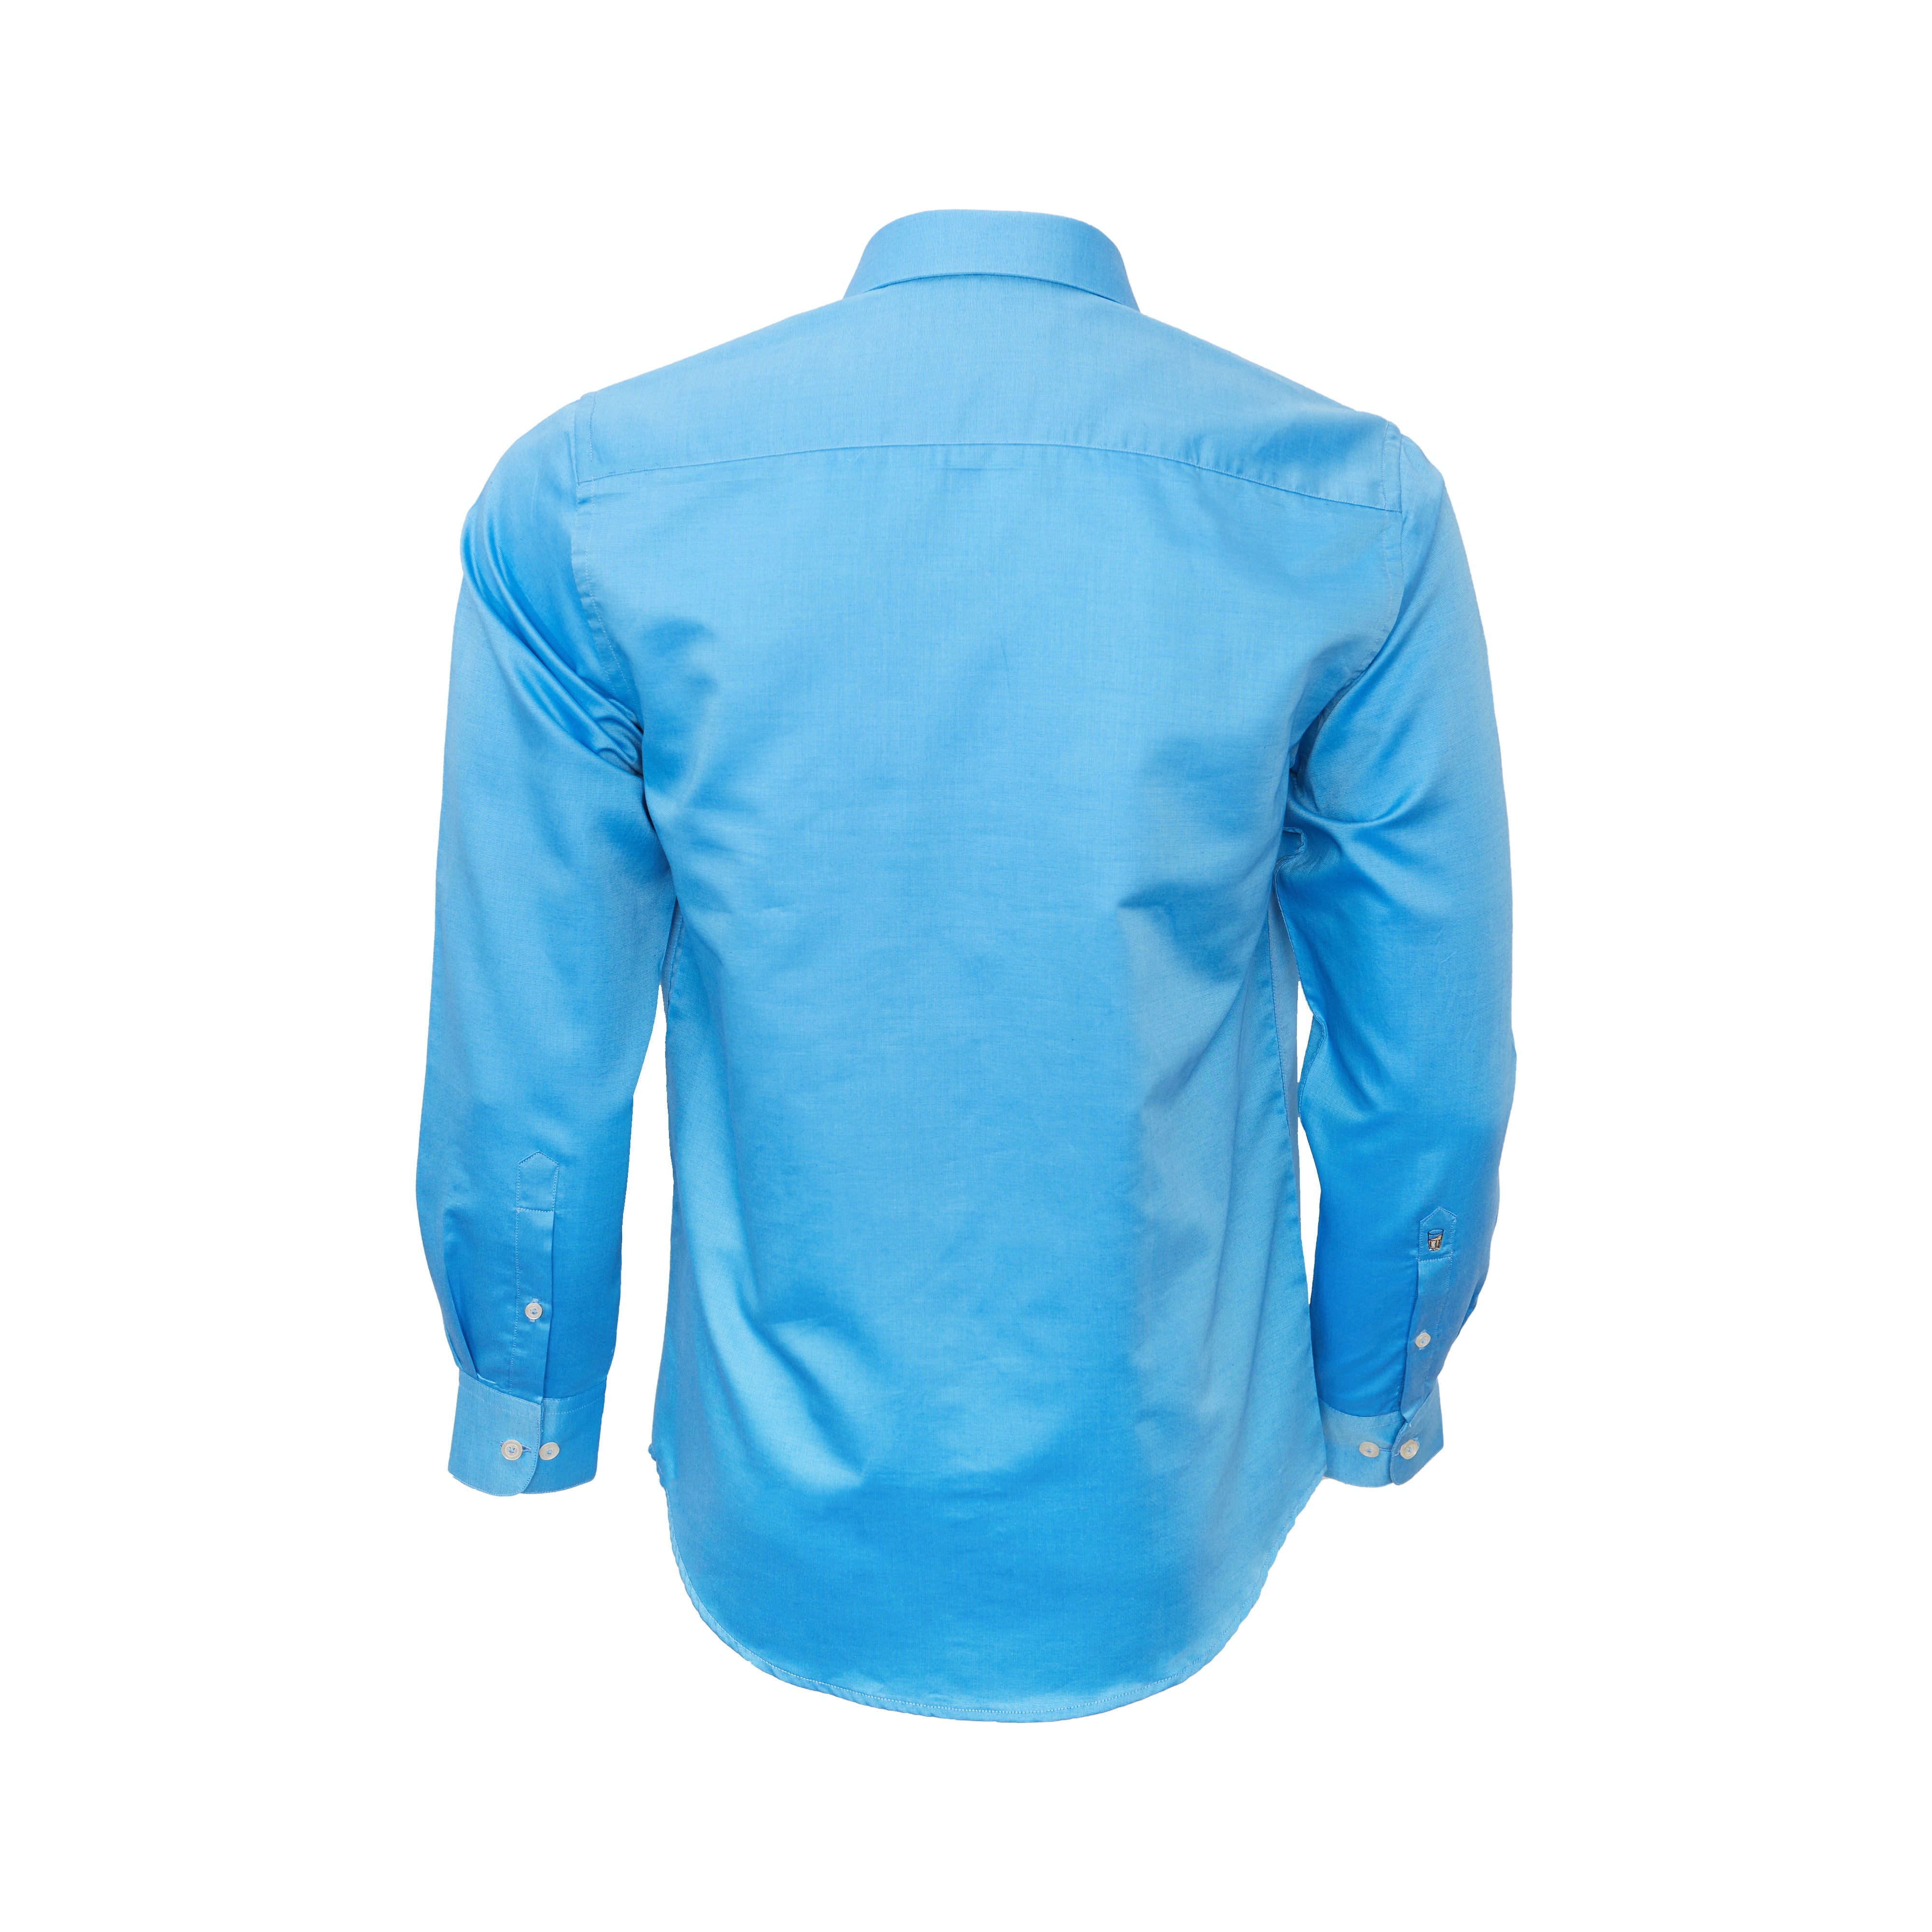 Supima Cotton Aqua Blue Full-sleeved shirt